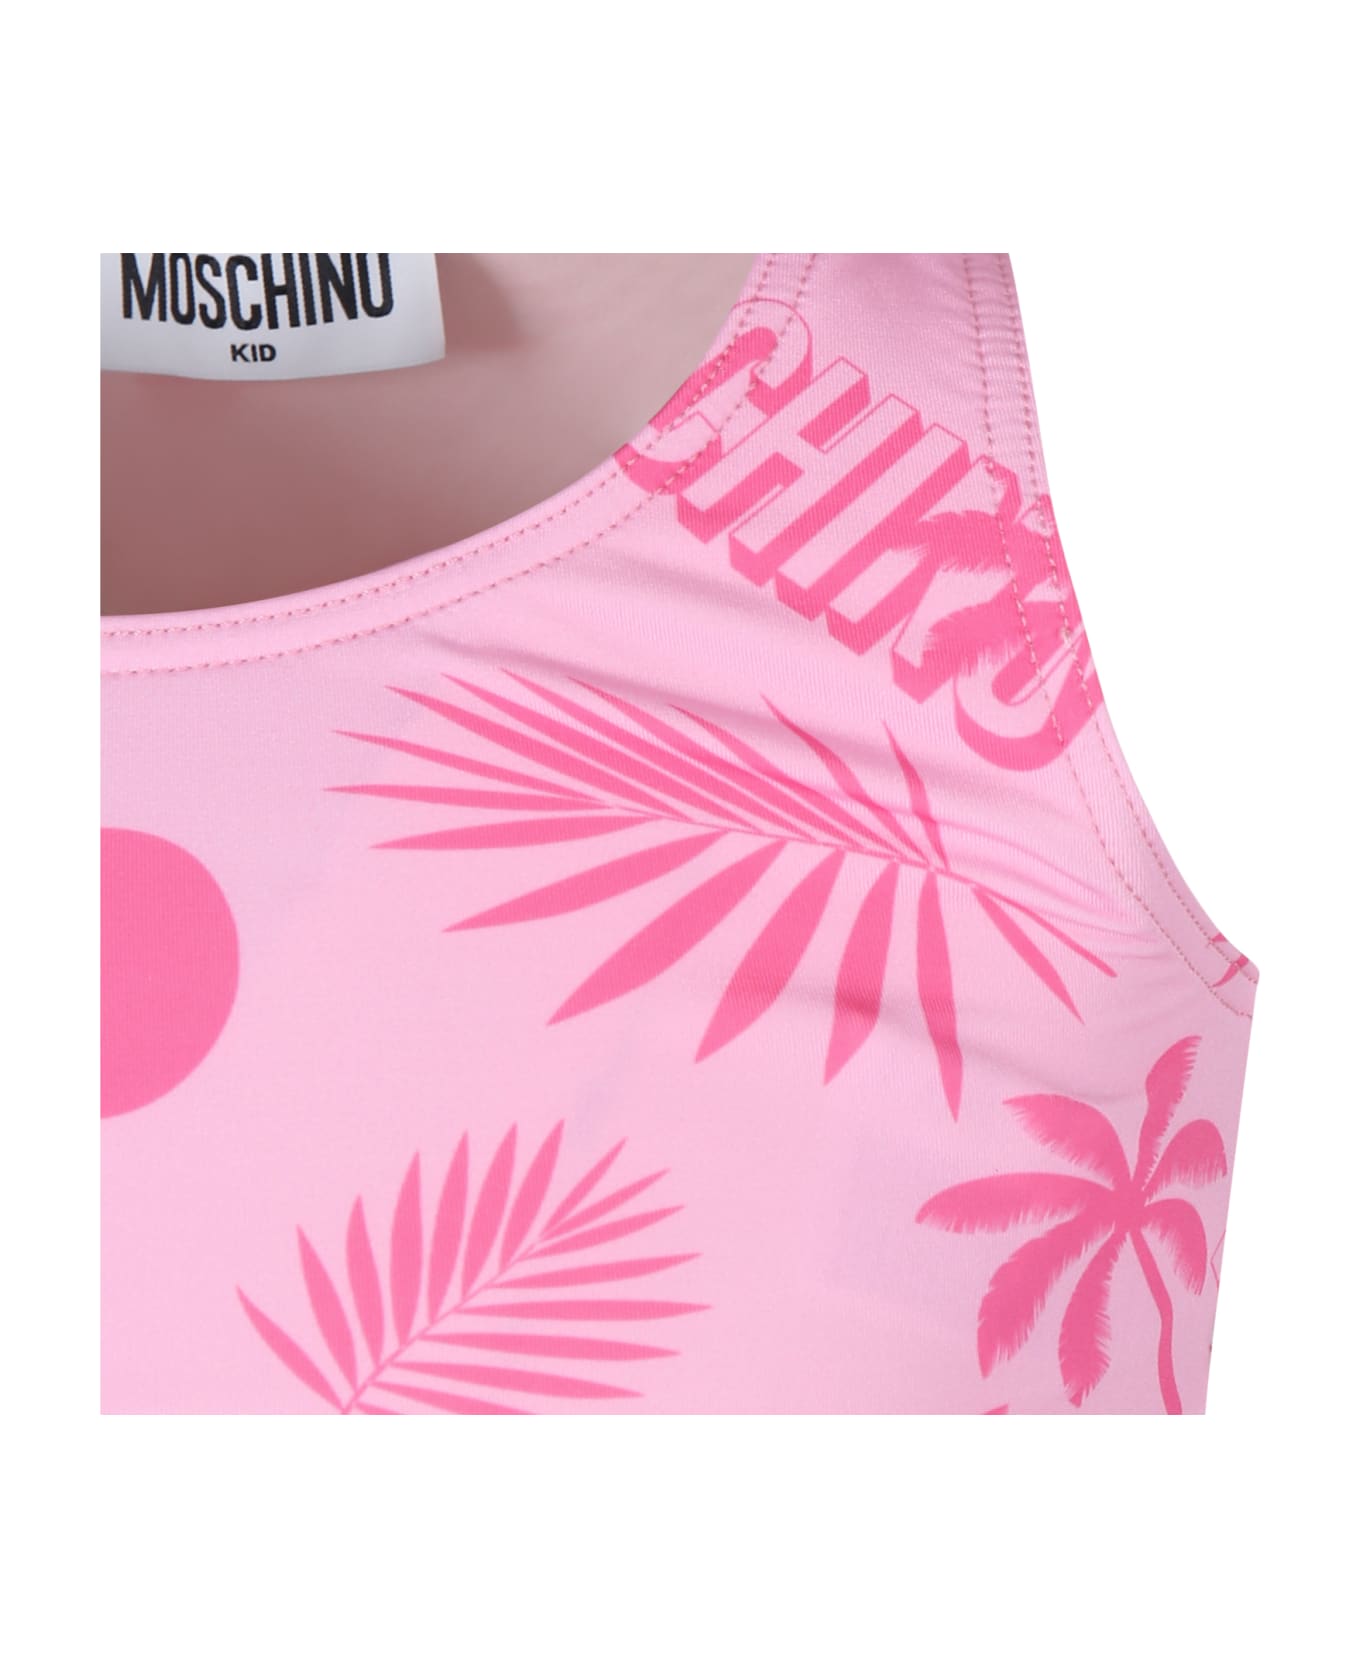 Moschino Pink Bikini For Girl With Teddy Bear And Palm Tree - Pink